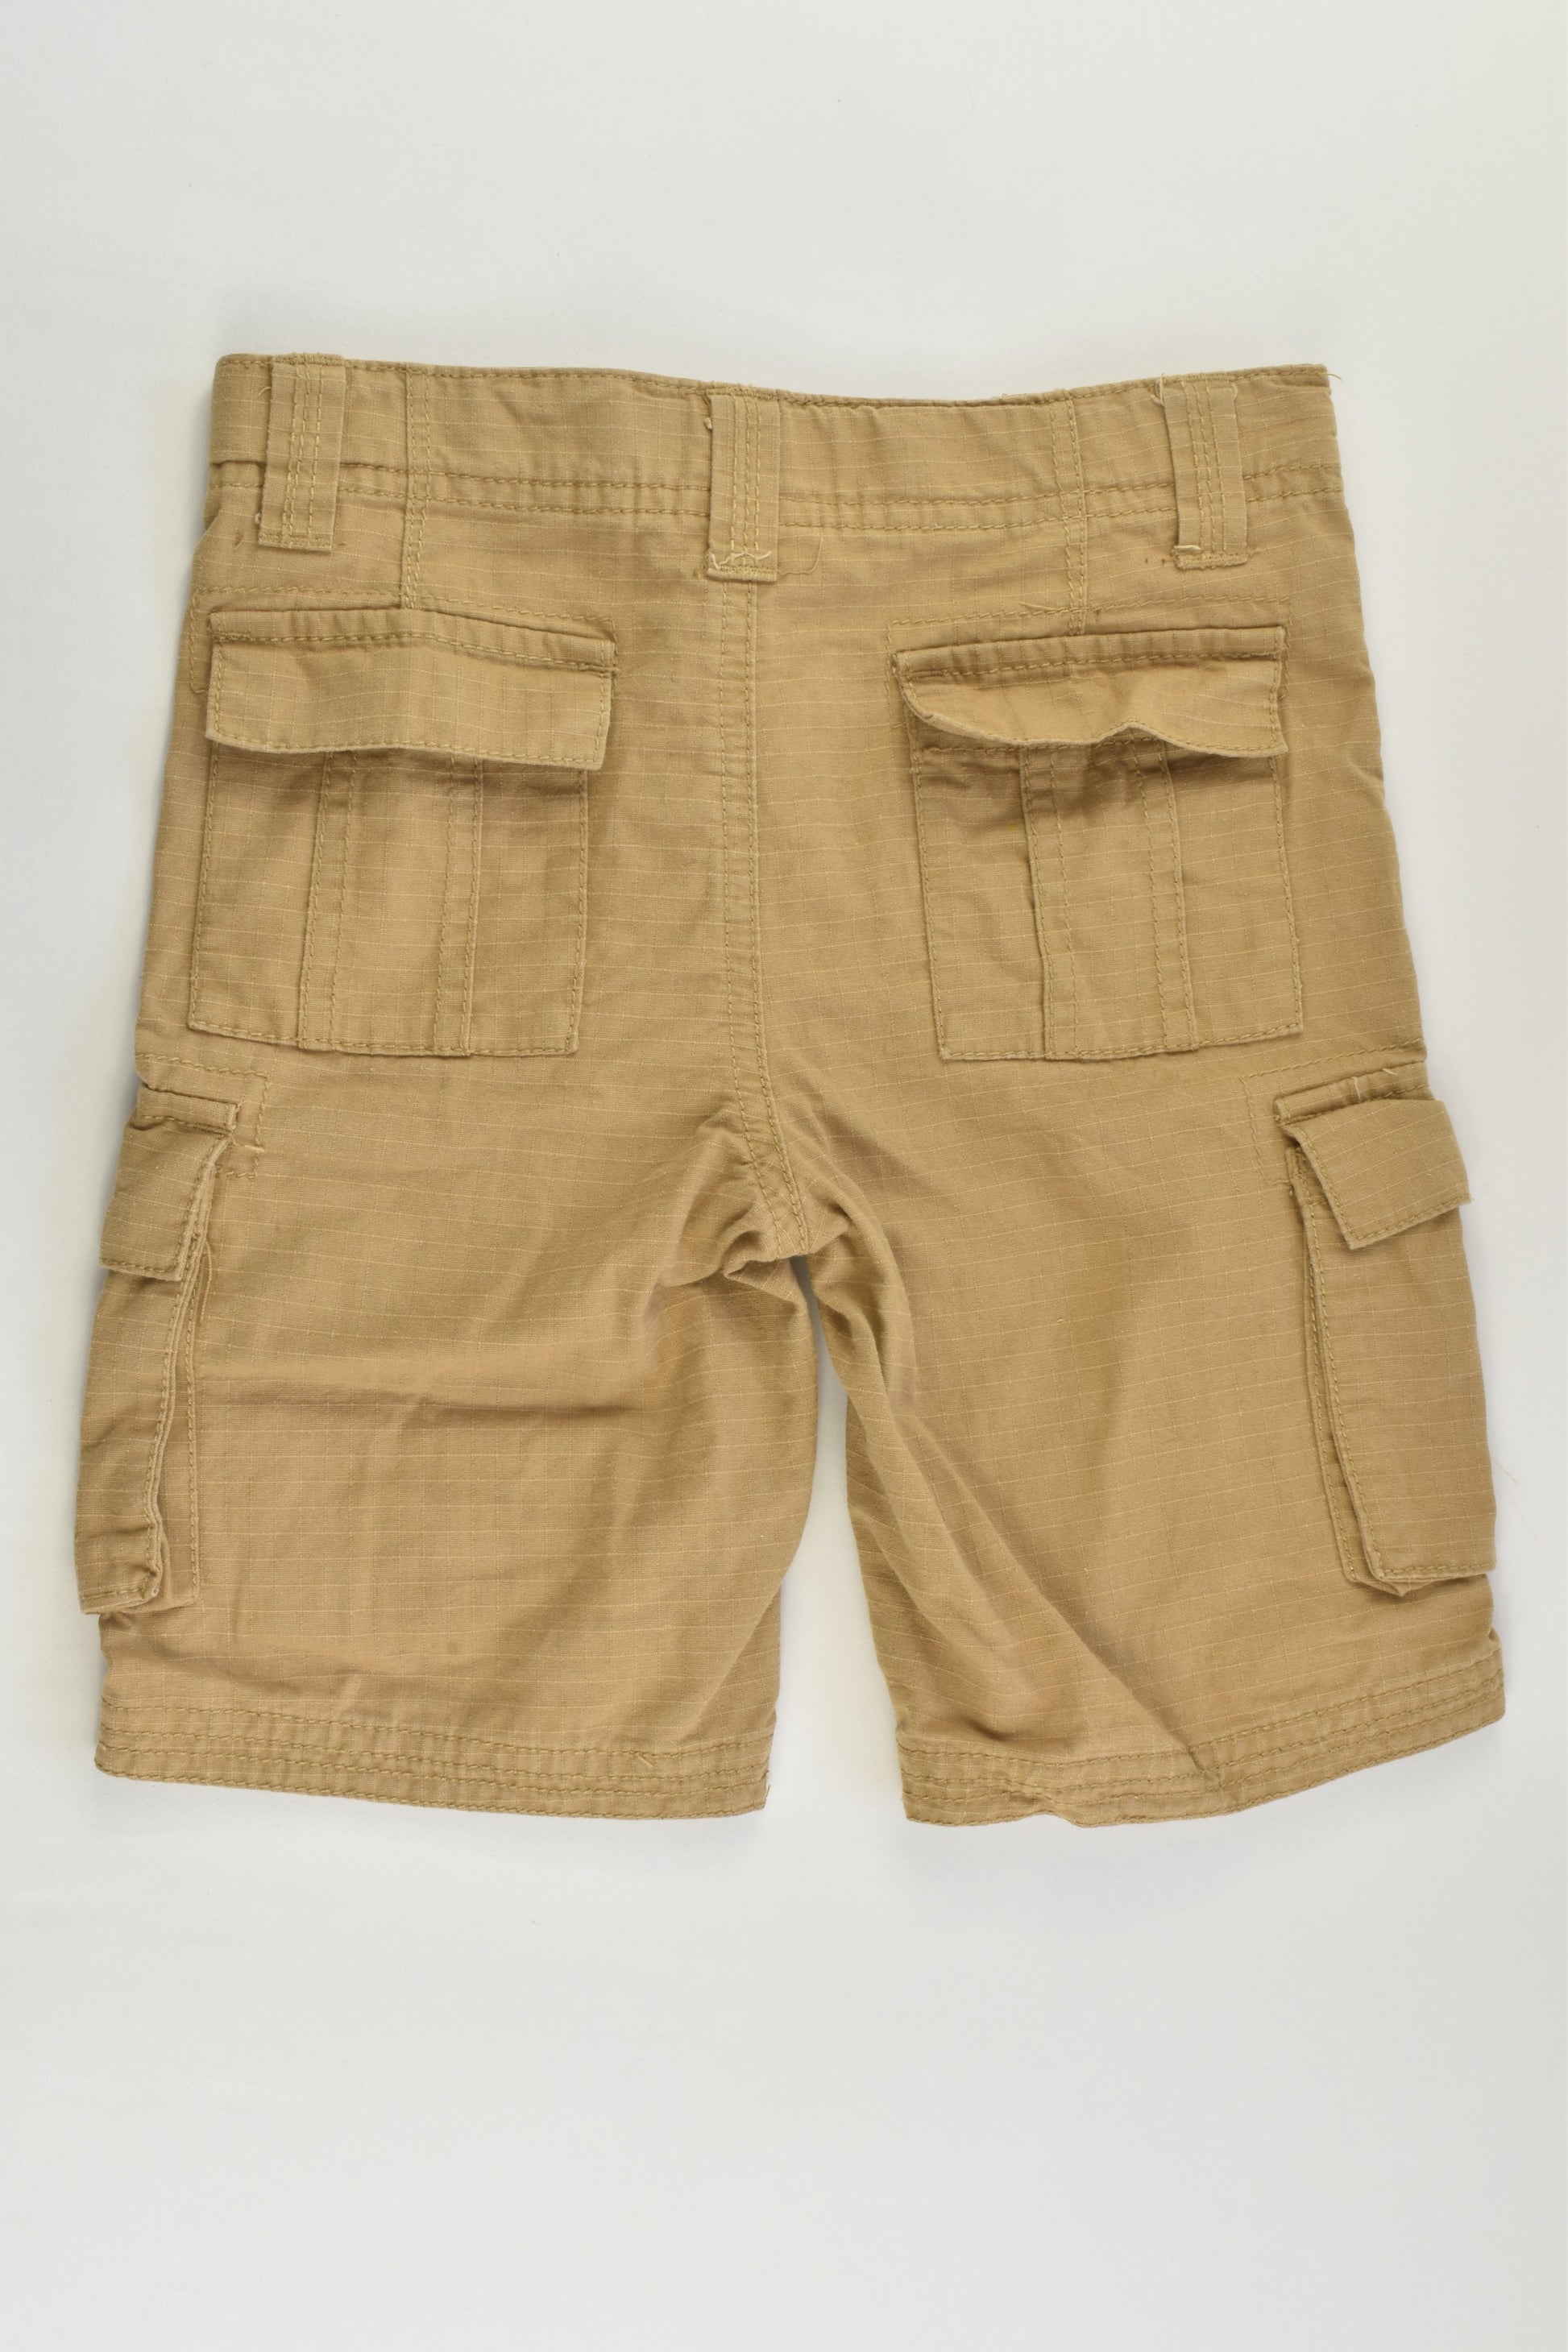 Jack & Milly Size 4 Adjustable waist Shorts